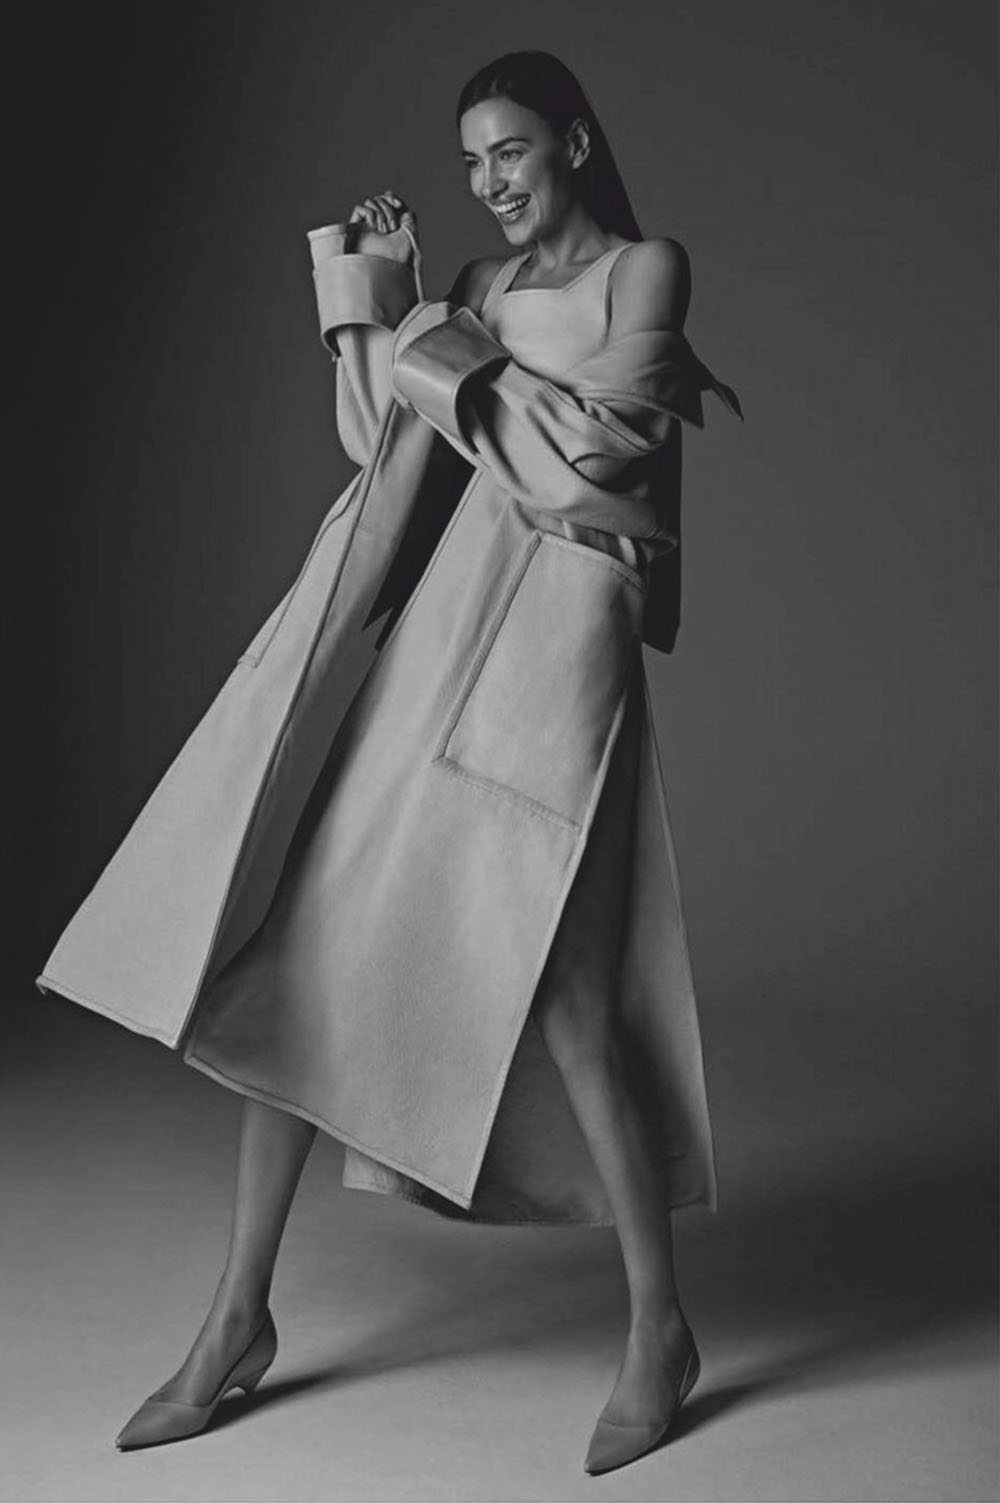 Irina Shayk by An Le for Vogue Mexico & Latin America January 2019